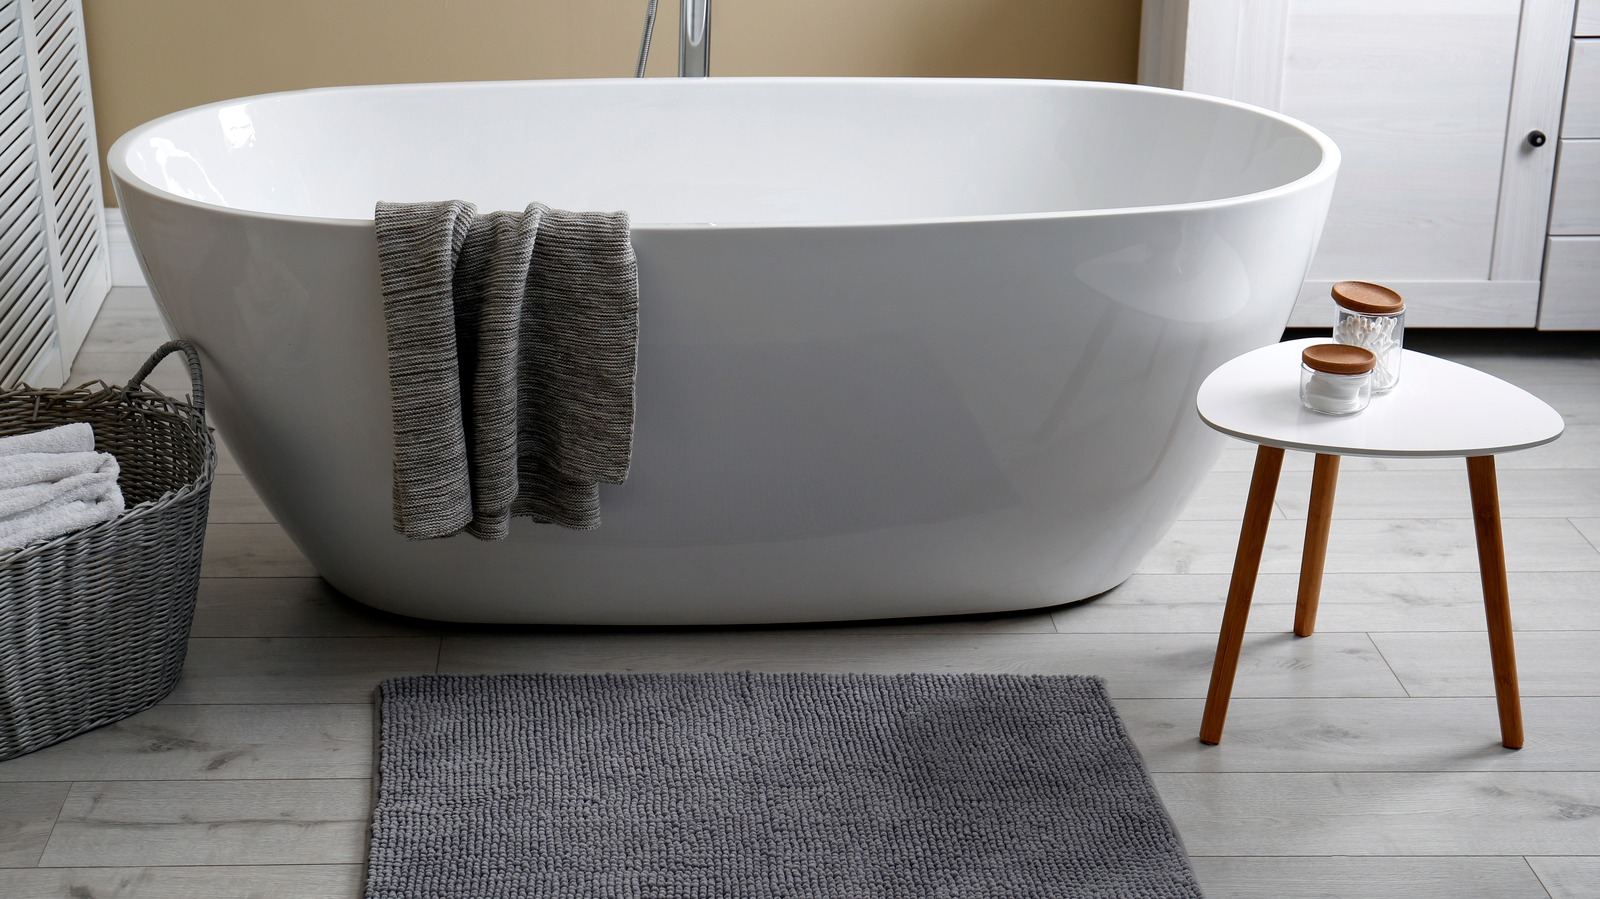 Newly Refinished Bathtub Mat  Refinished Bath Solutions